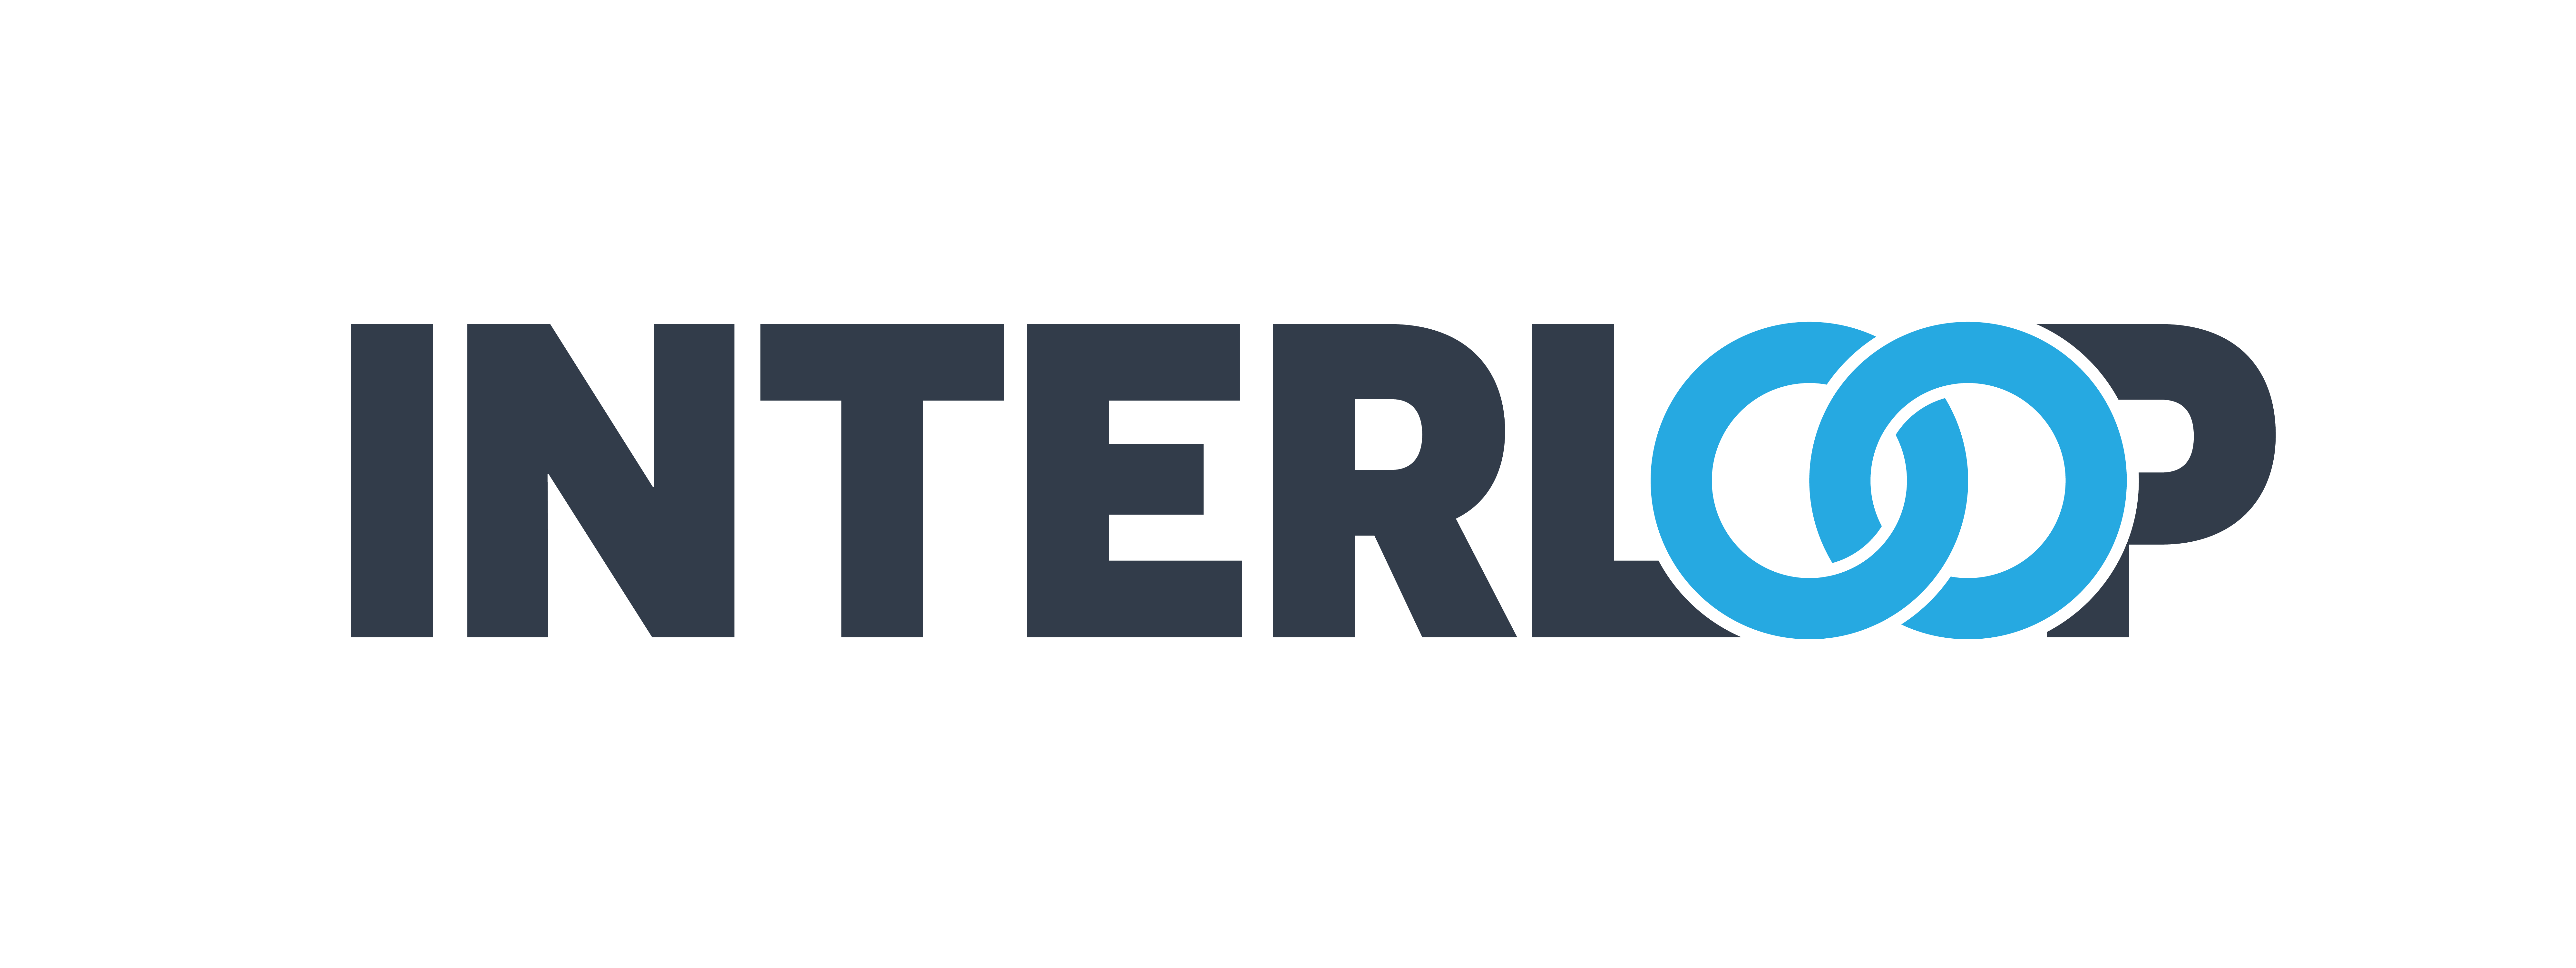 Interloop Logo Original